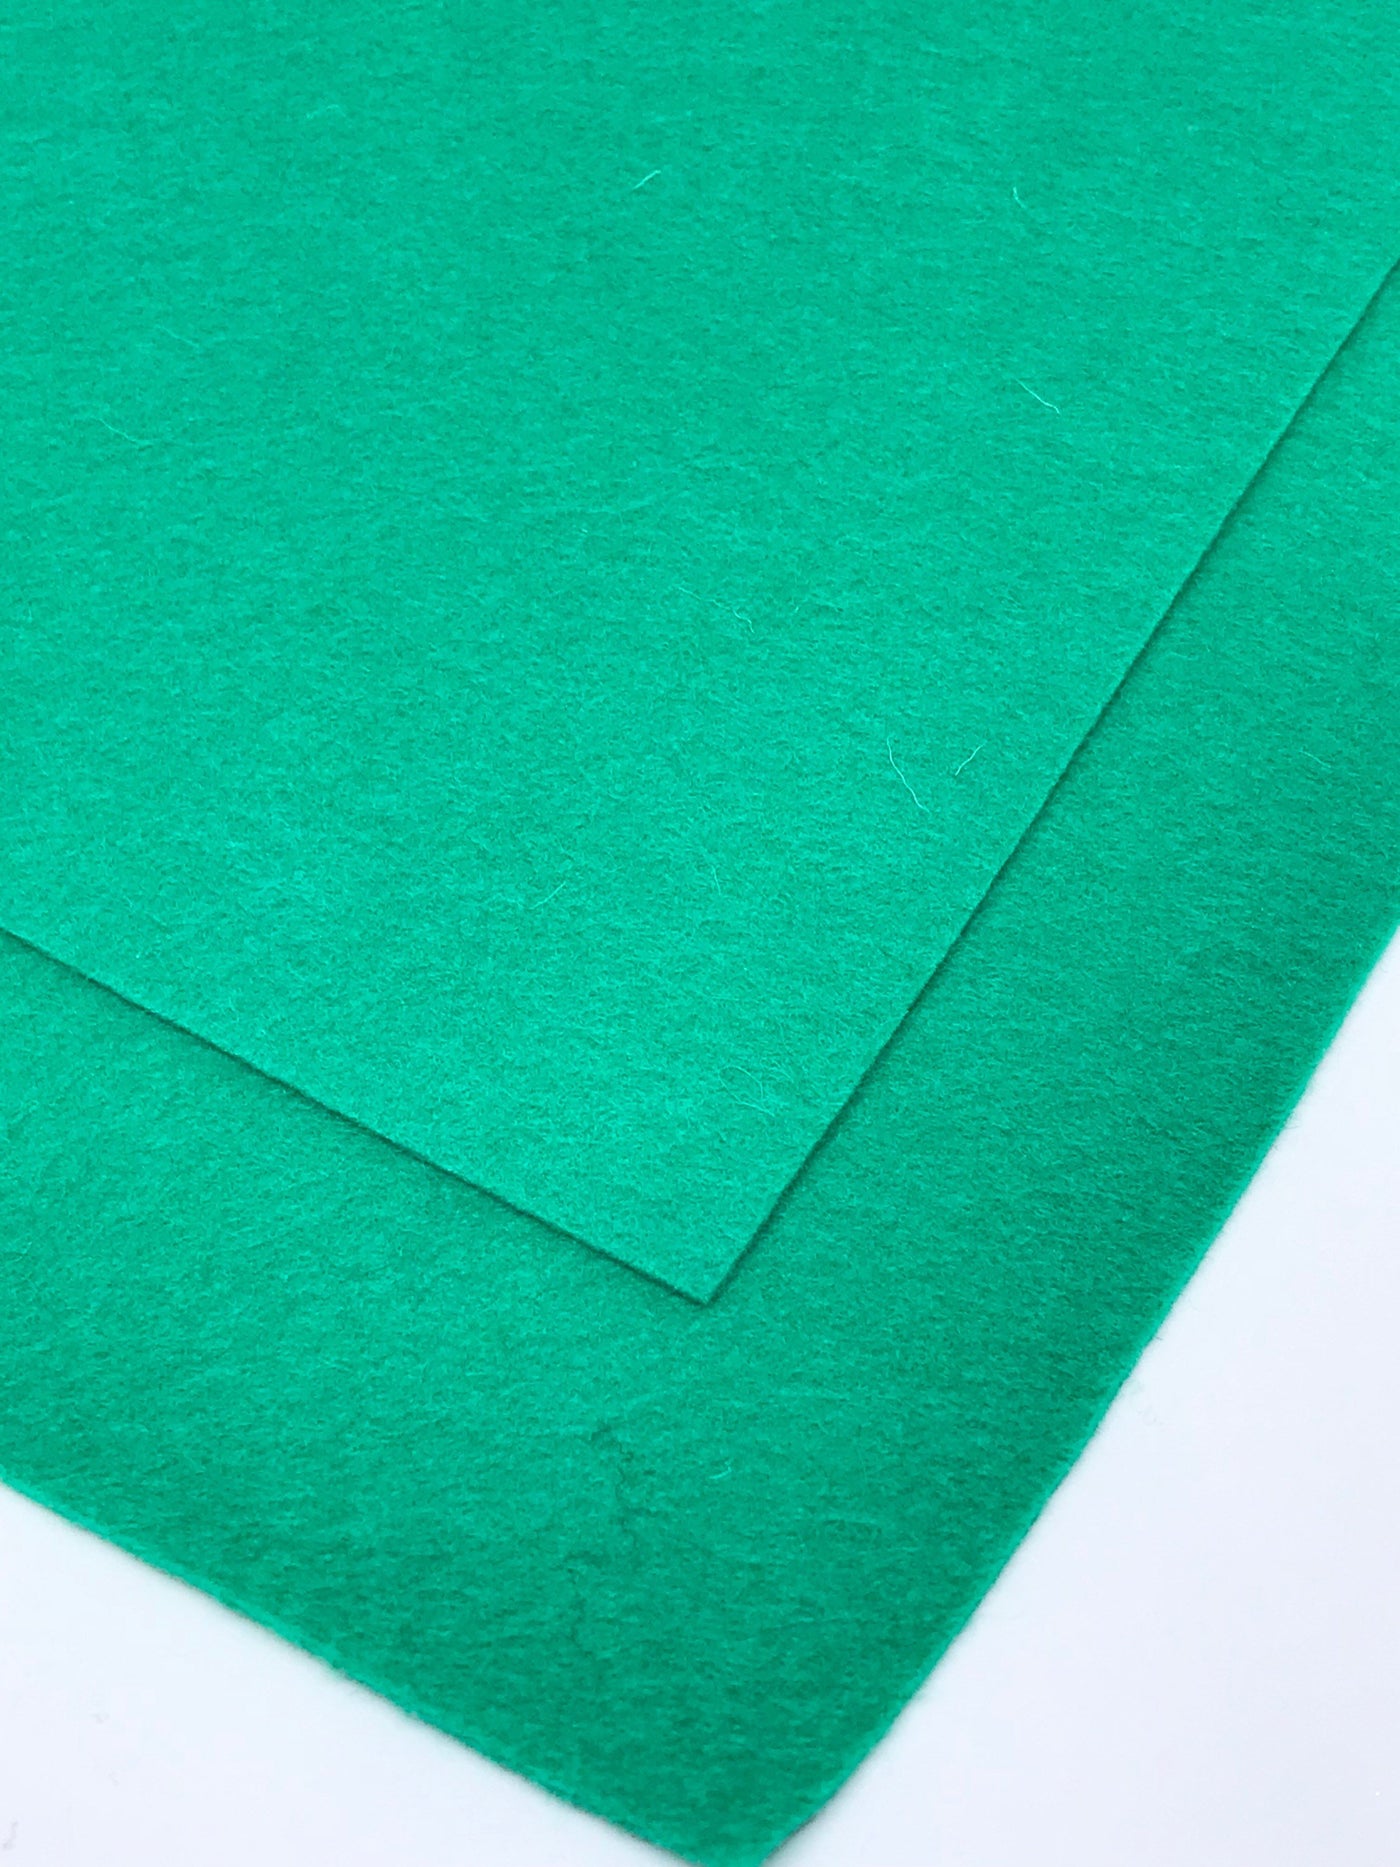 1mm Jade Green Merino Wool Felt A4 Sheet - No. 50